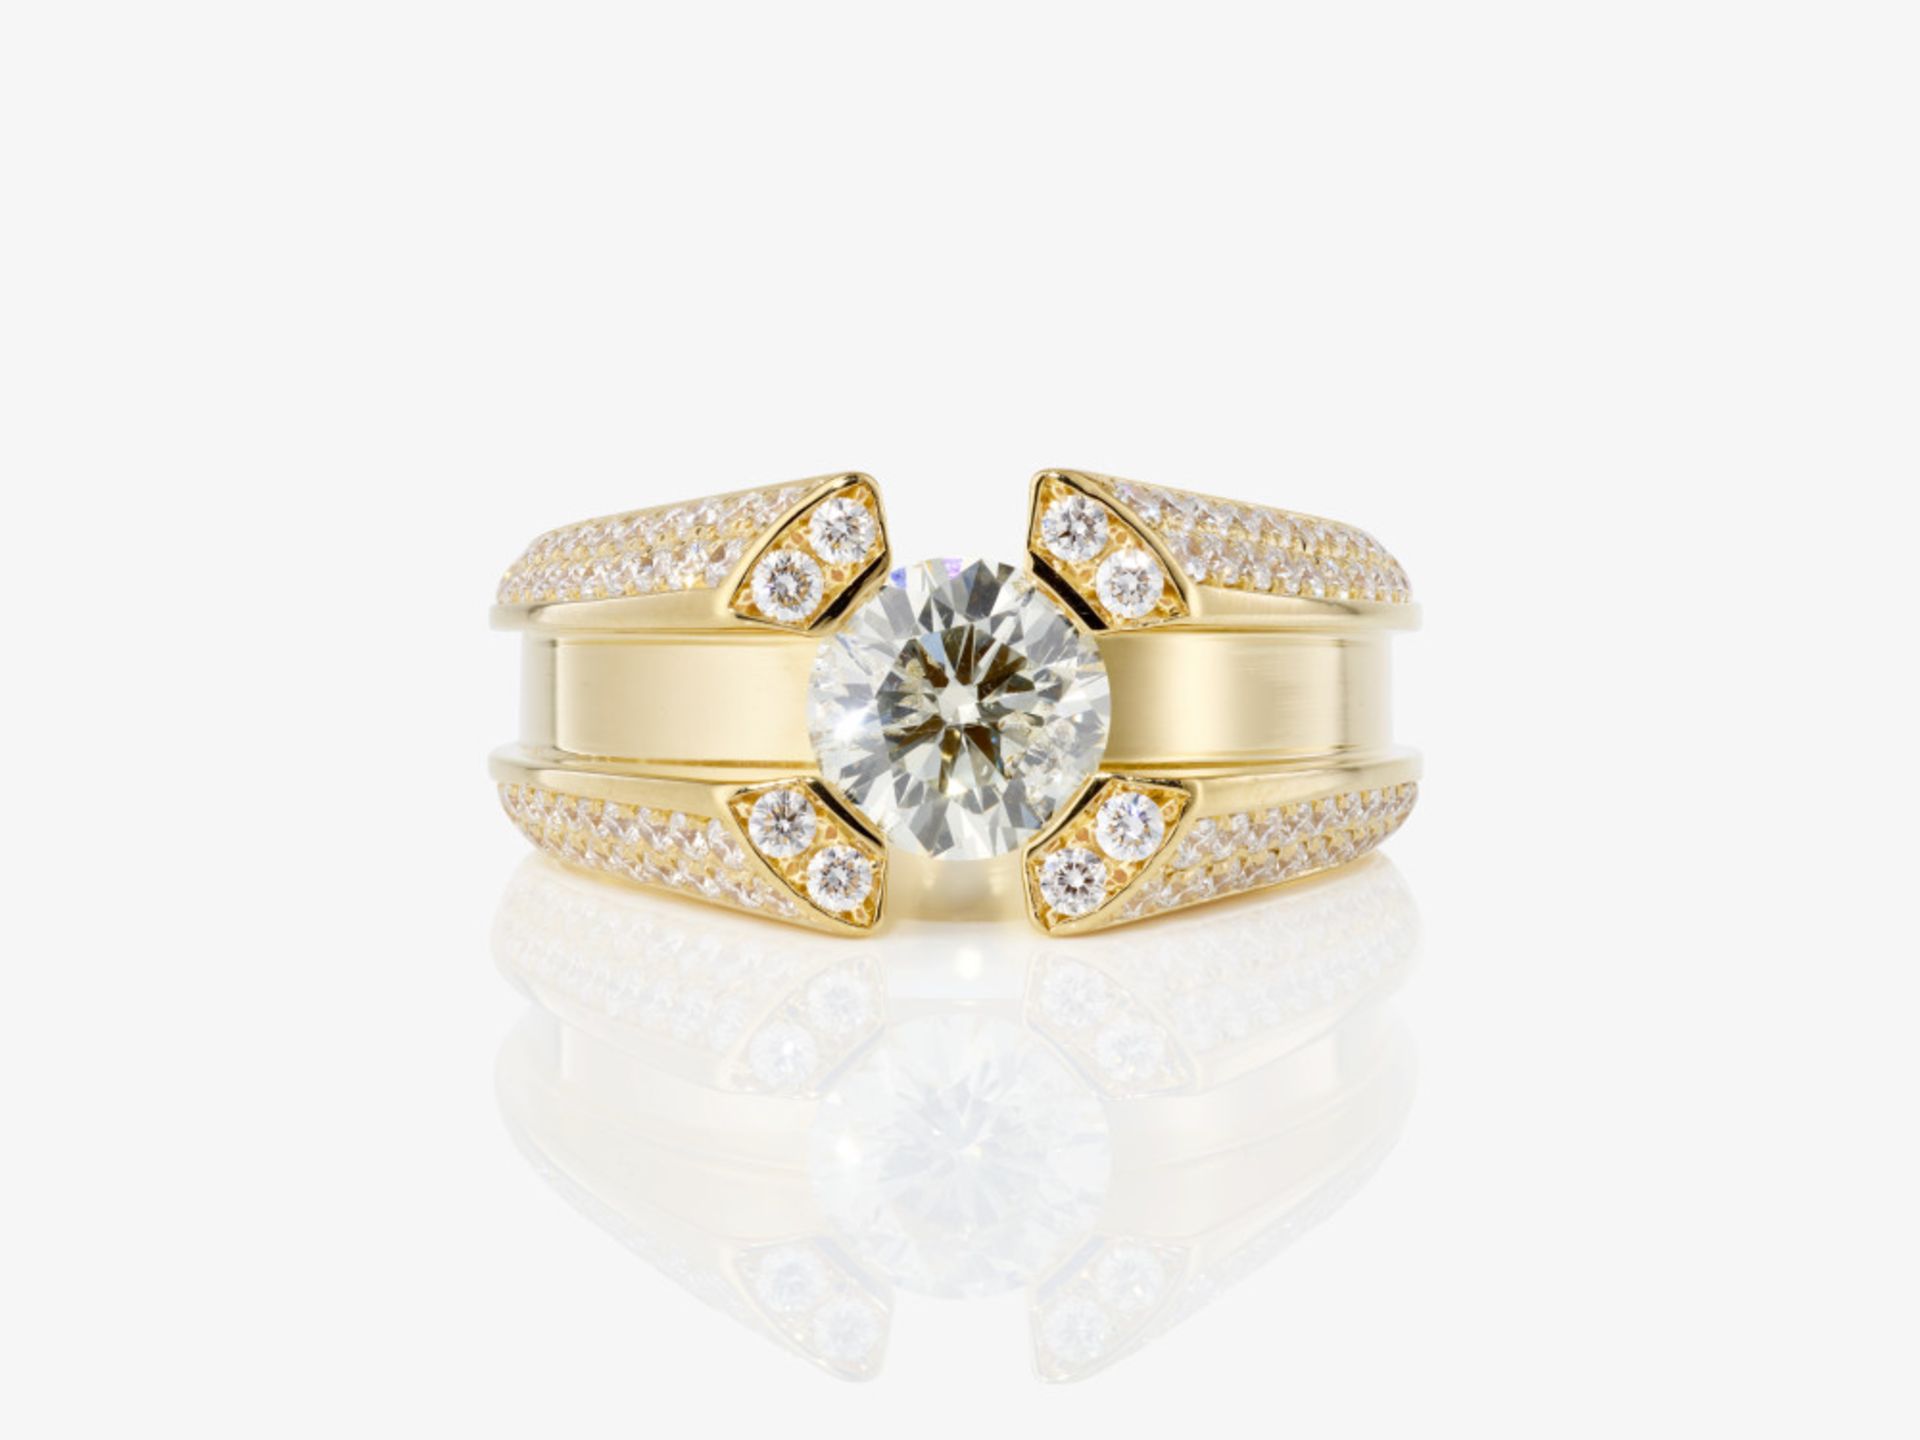 A gentlemens ring with brilliant-cut diamonds - Belgium, ANTWERP ATELIERS - Image 2 of 3